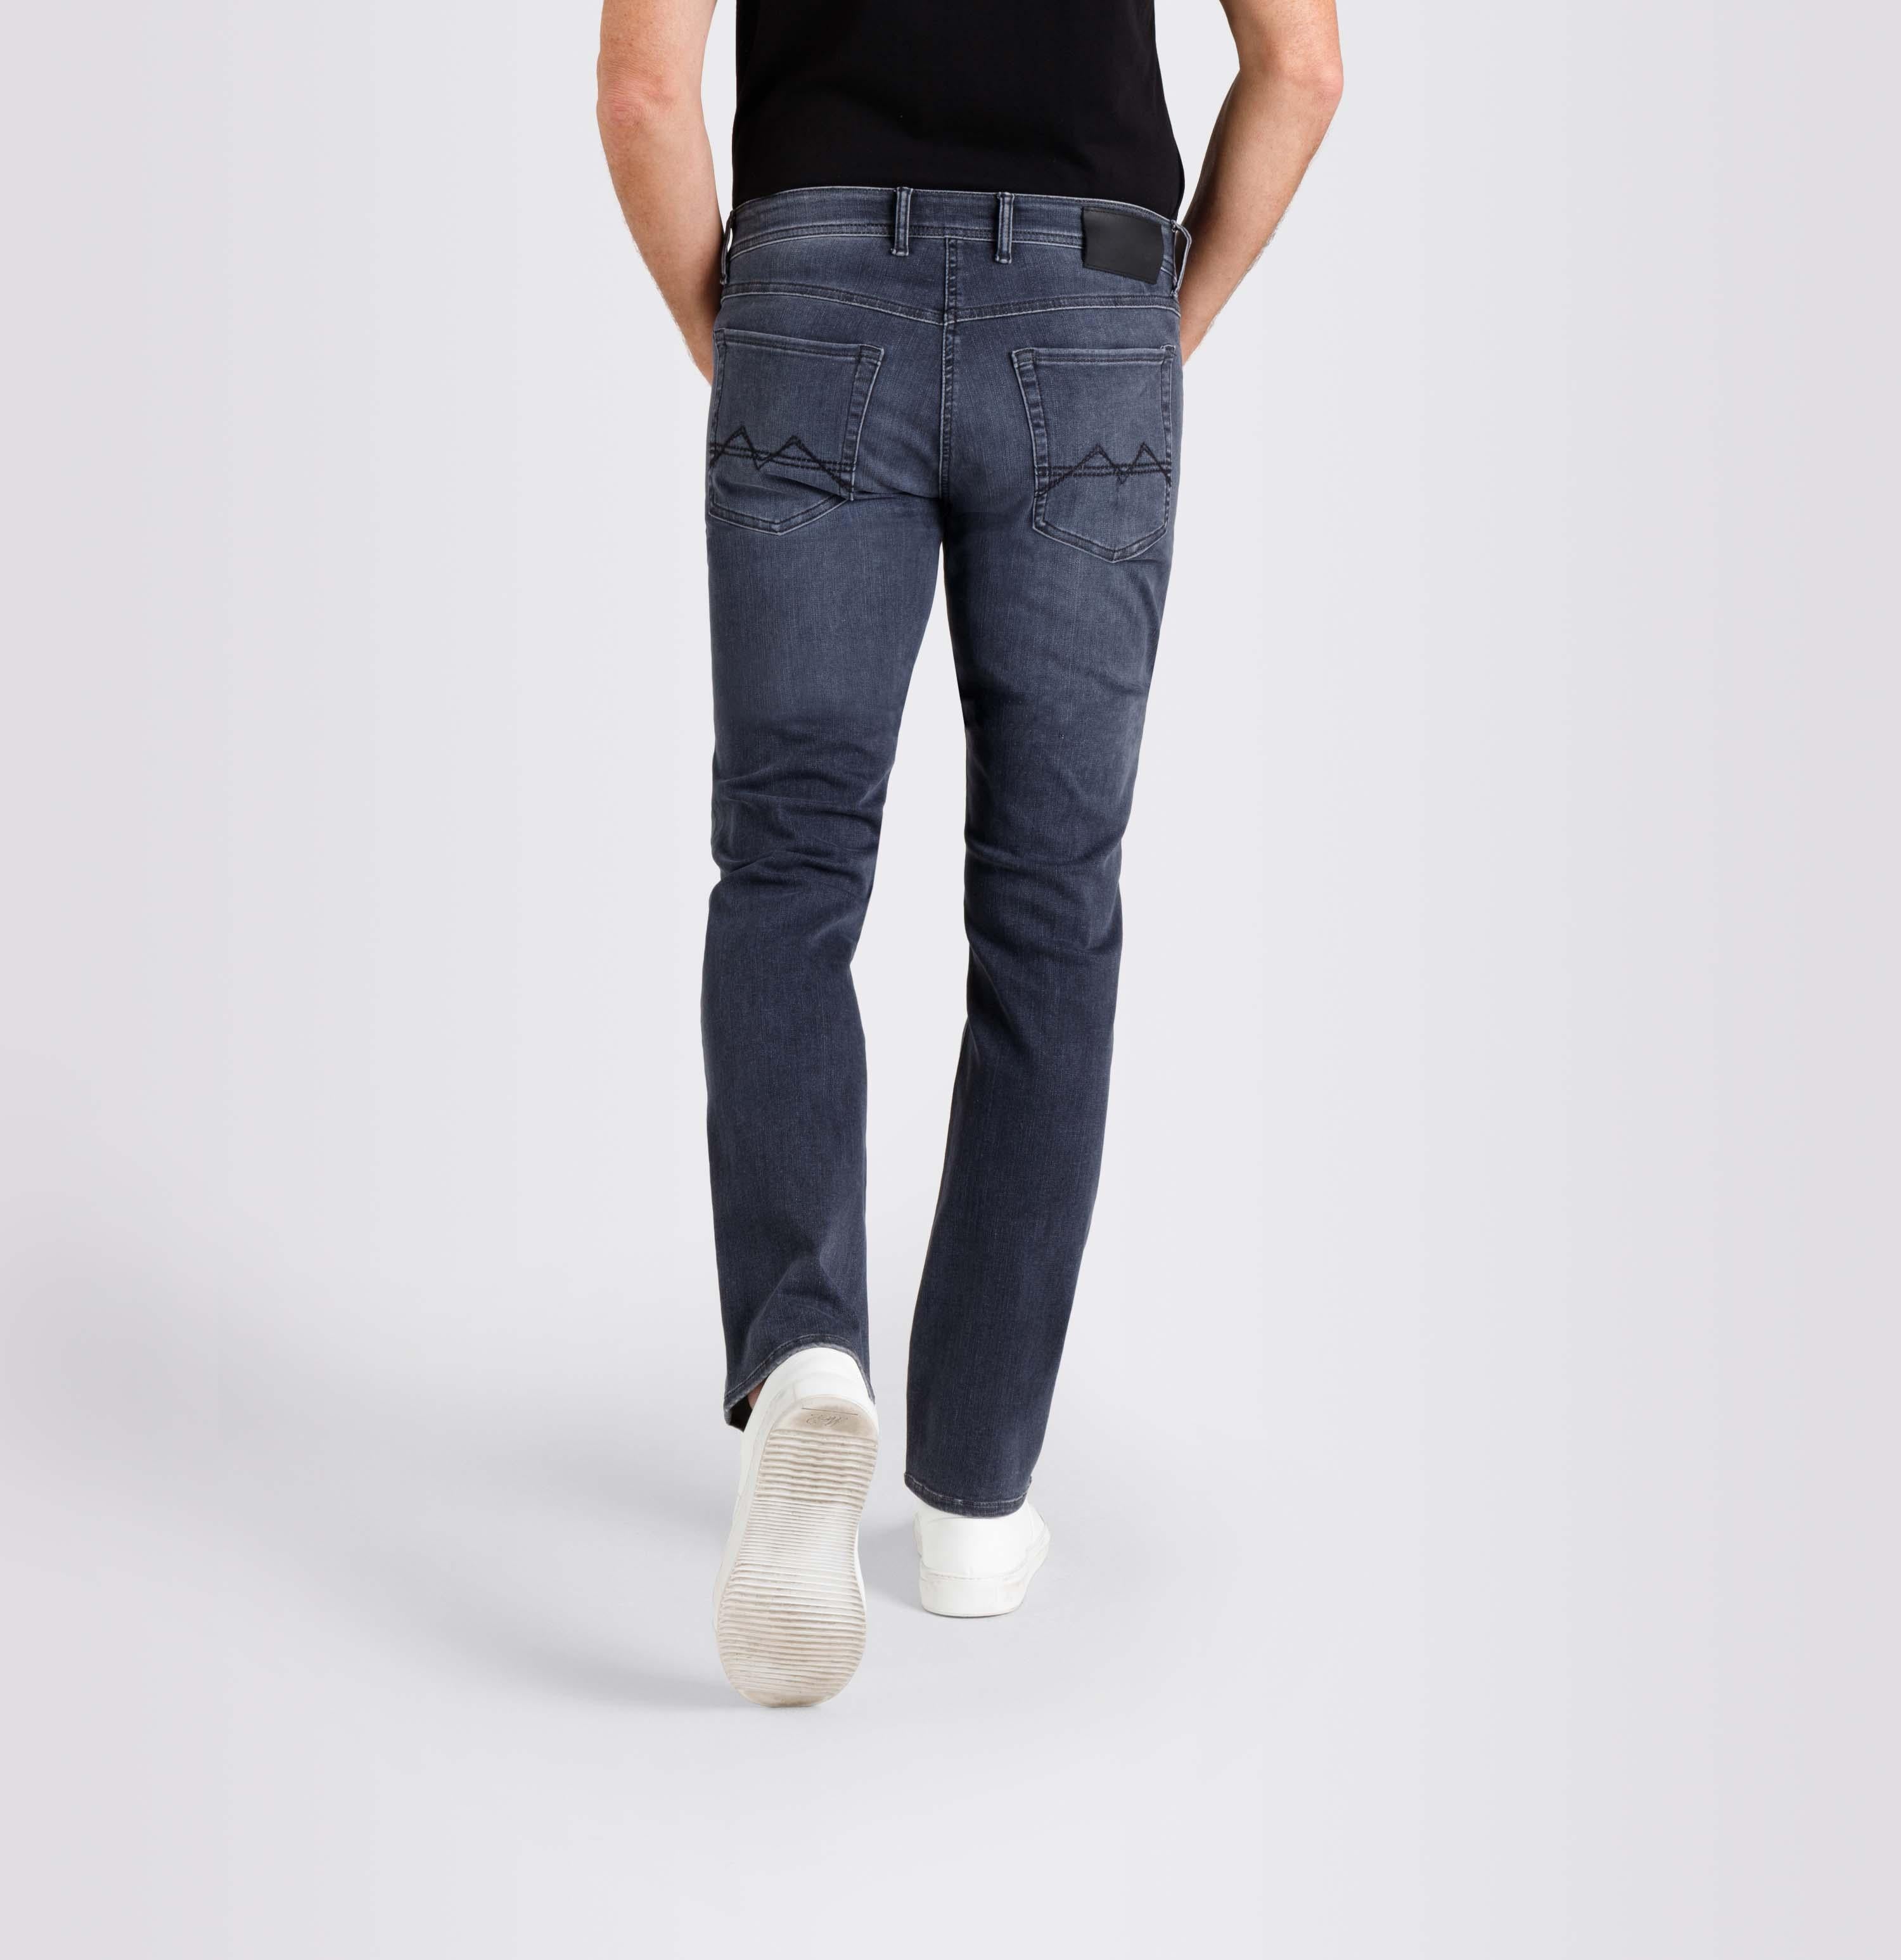 Mac Jeans Driver Jean in Dark Grey – Raggs - Fashion for Men and Women